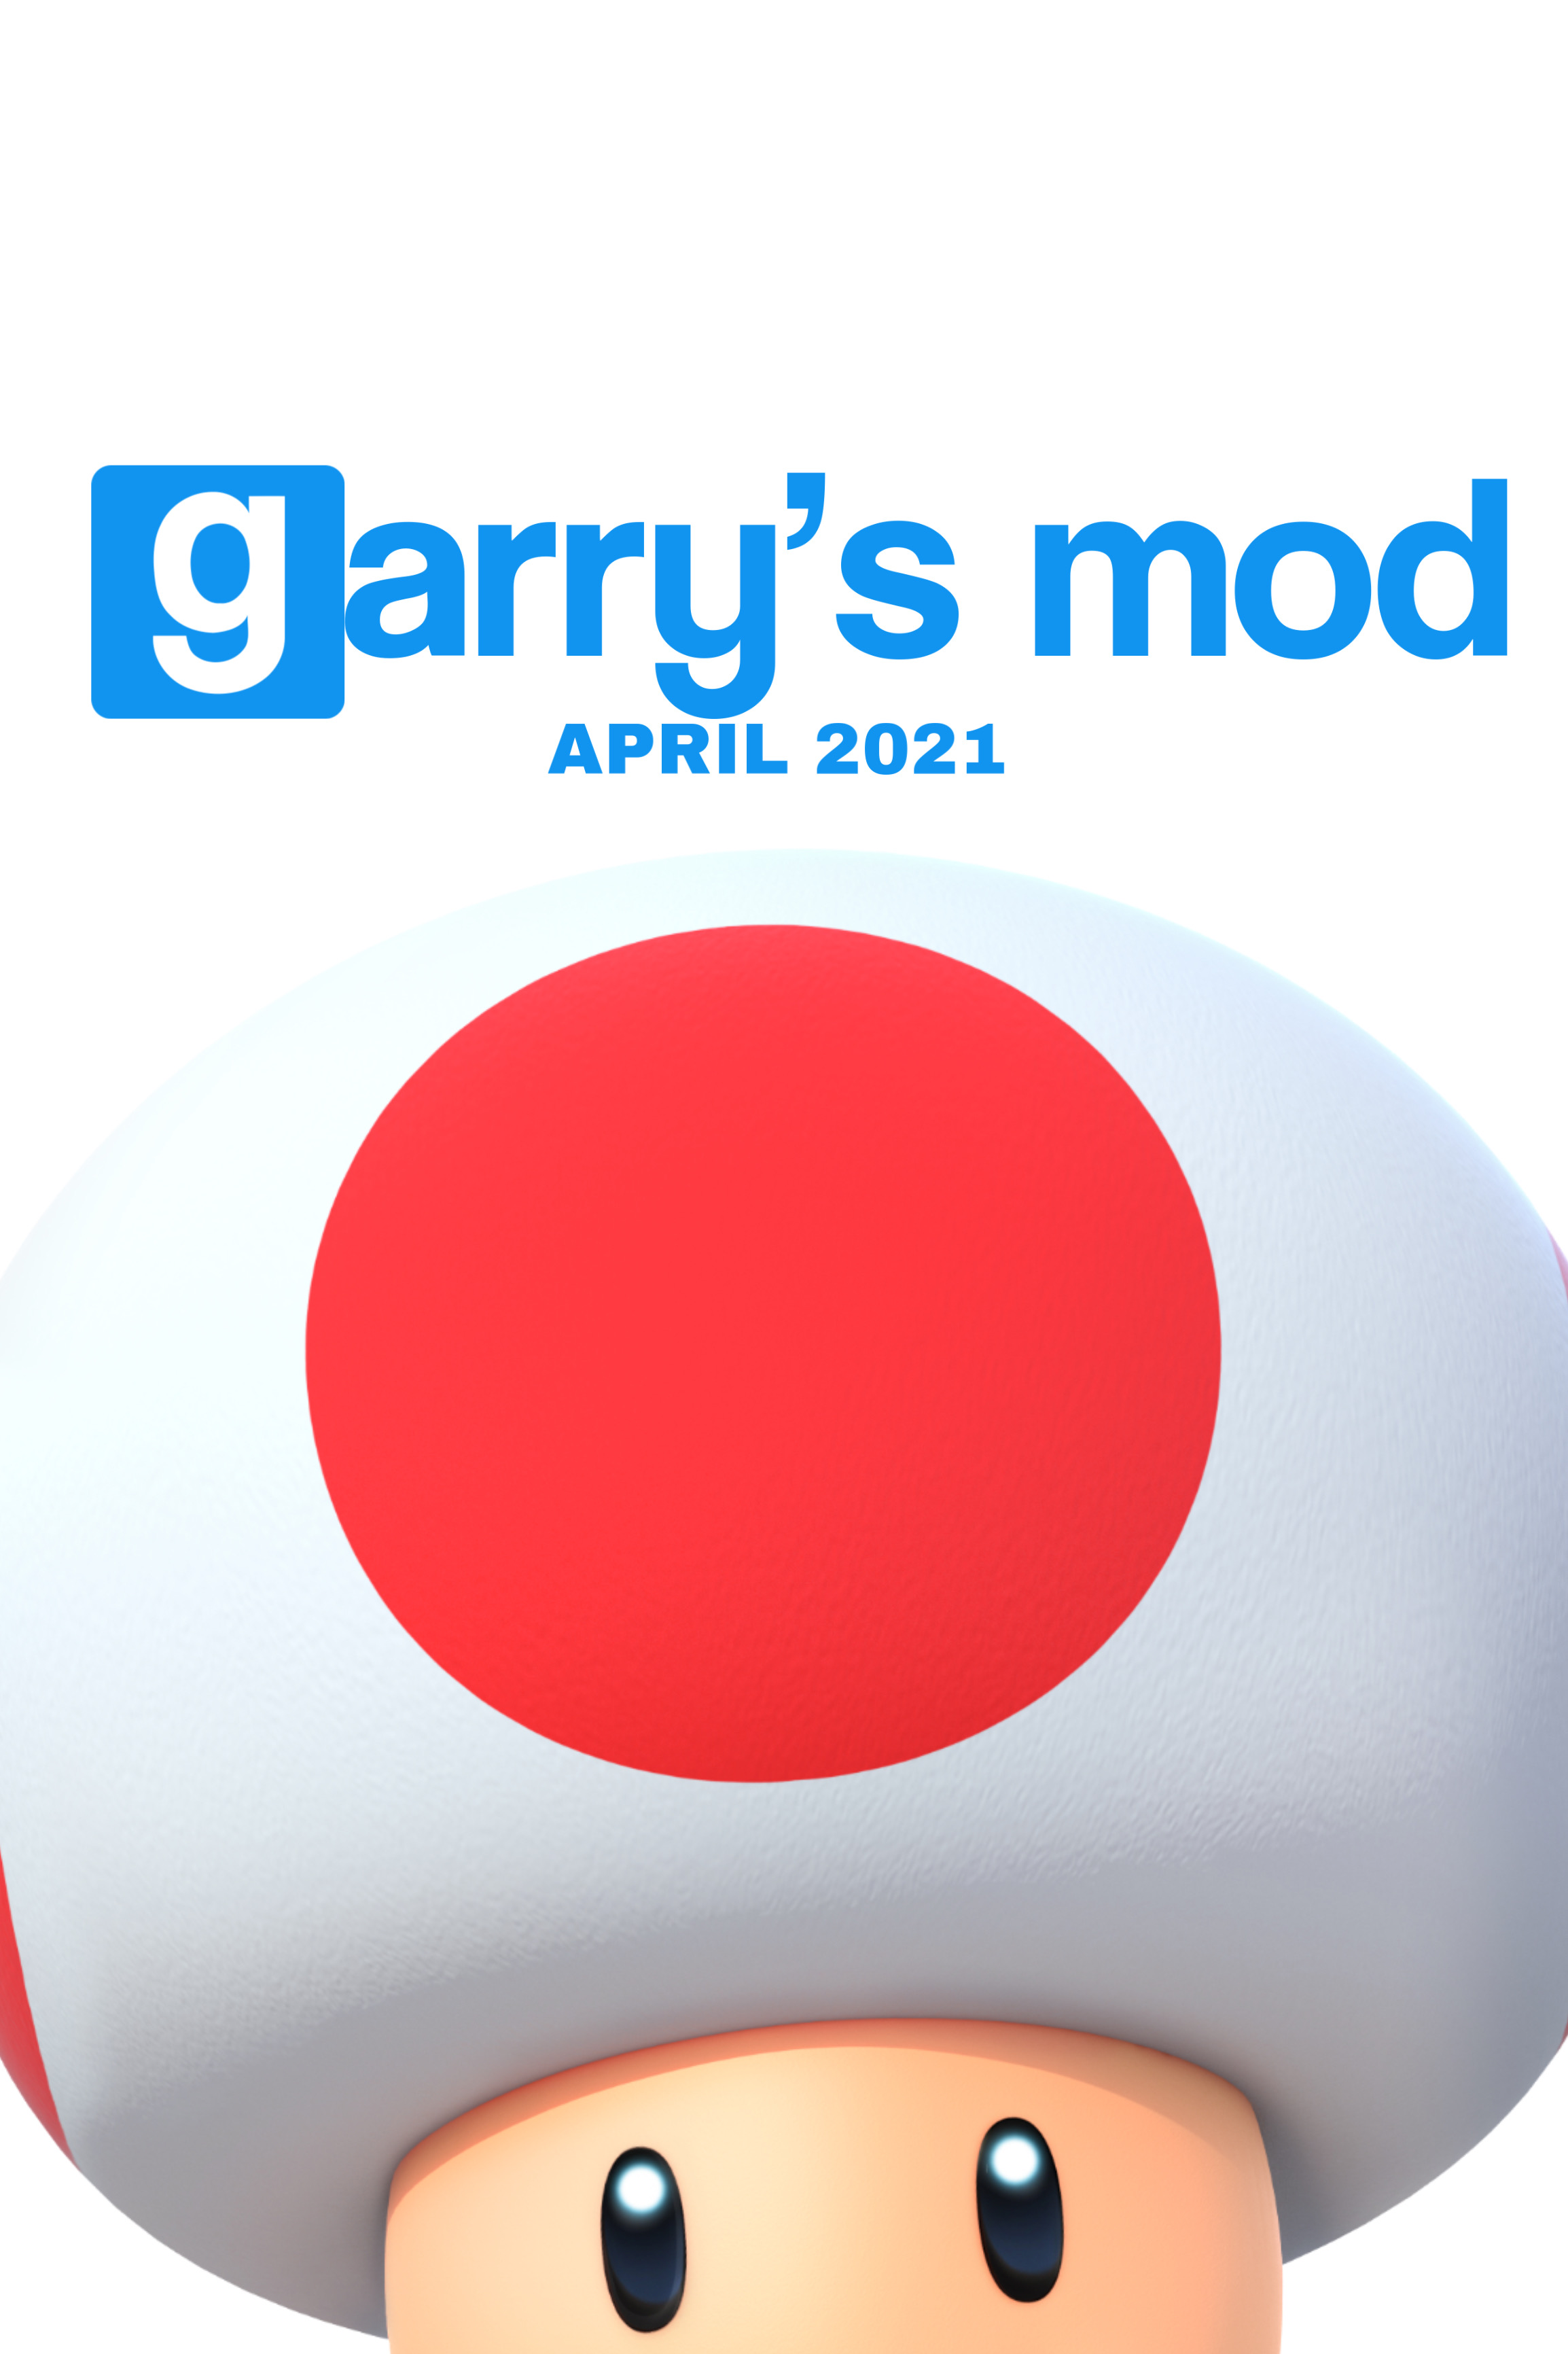 Garry's Mod - IGN